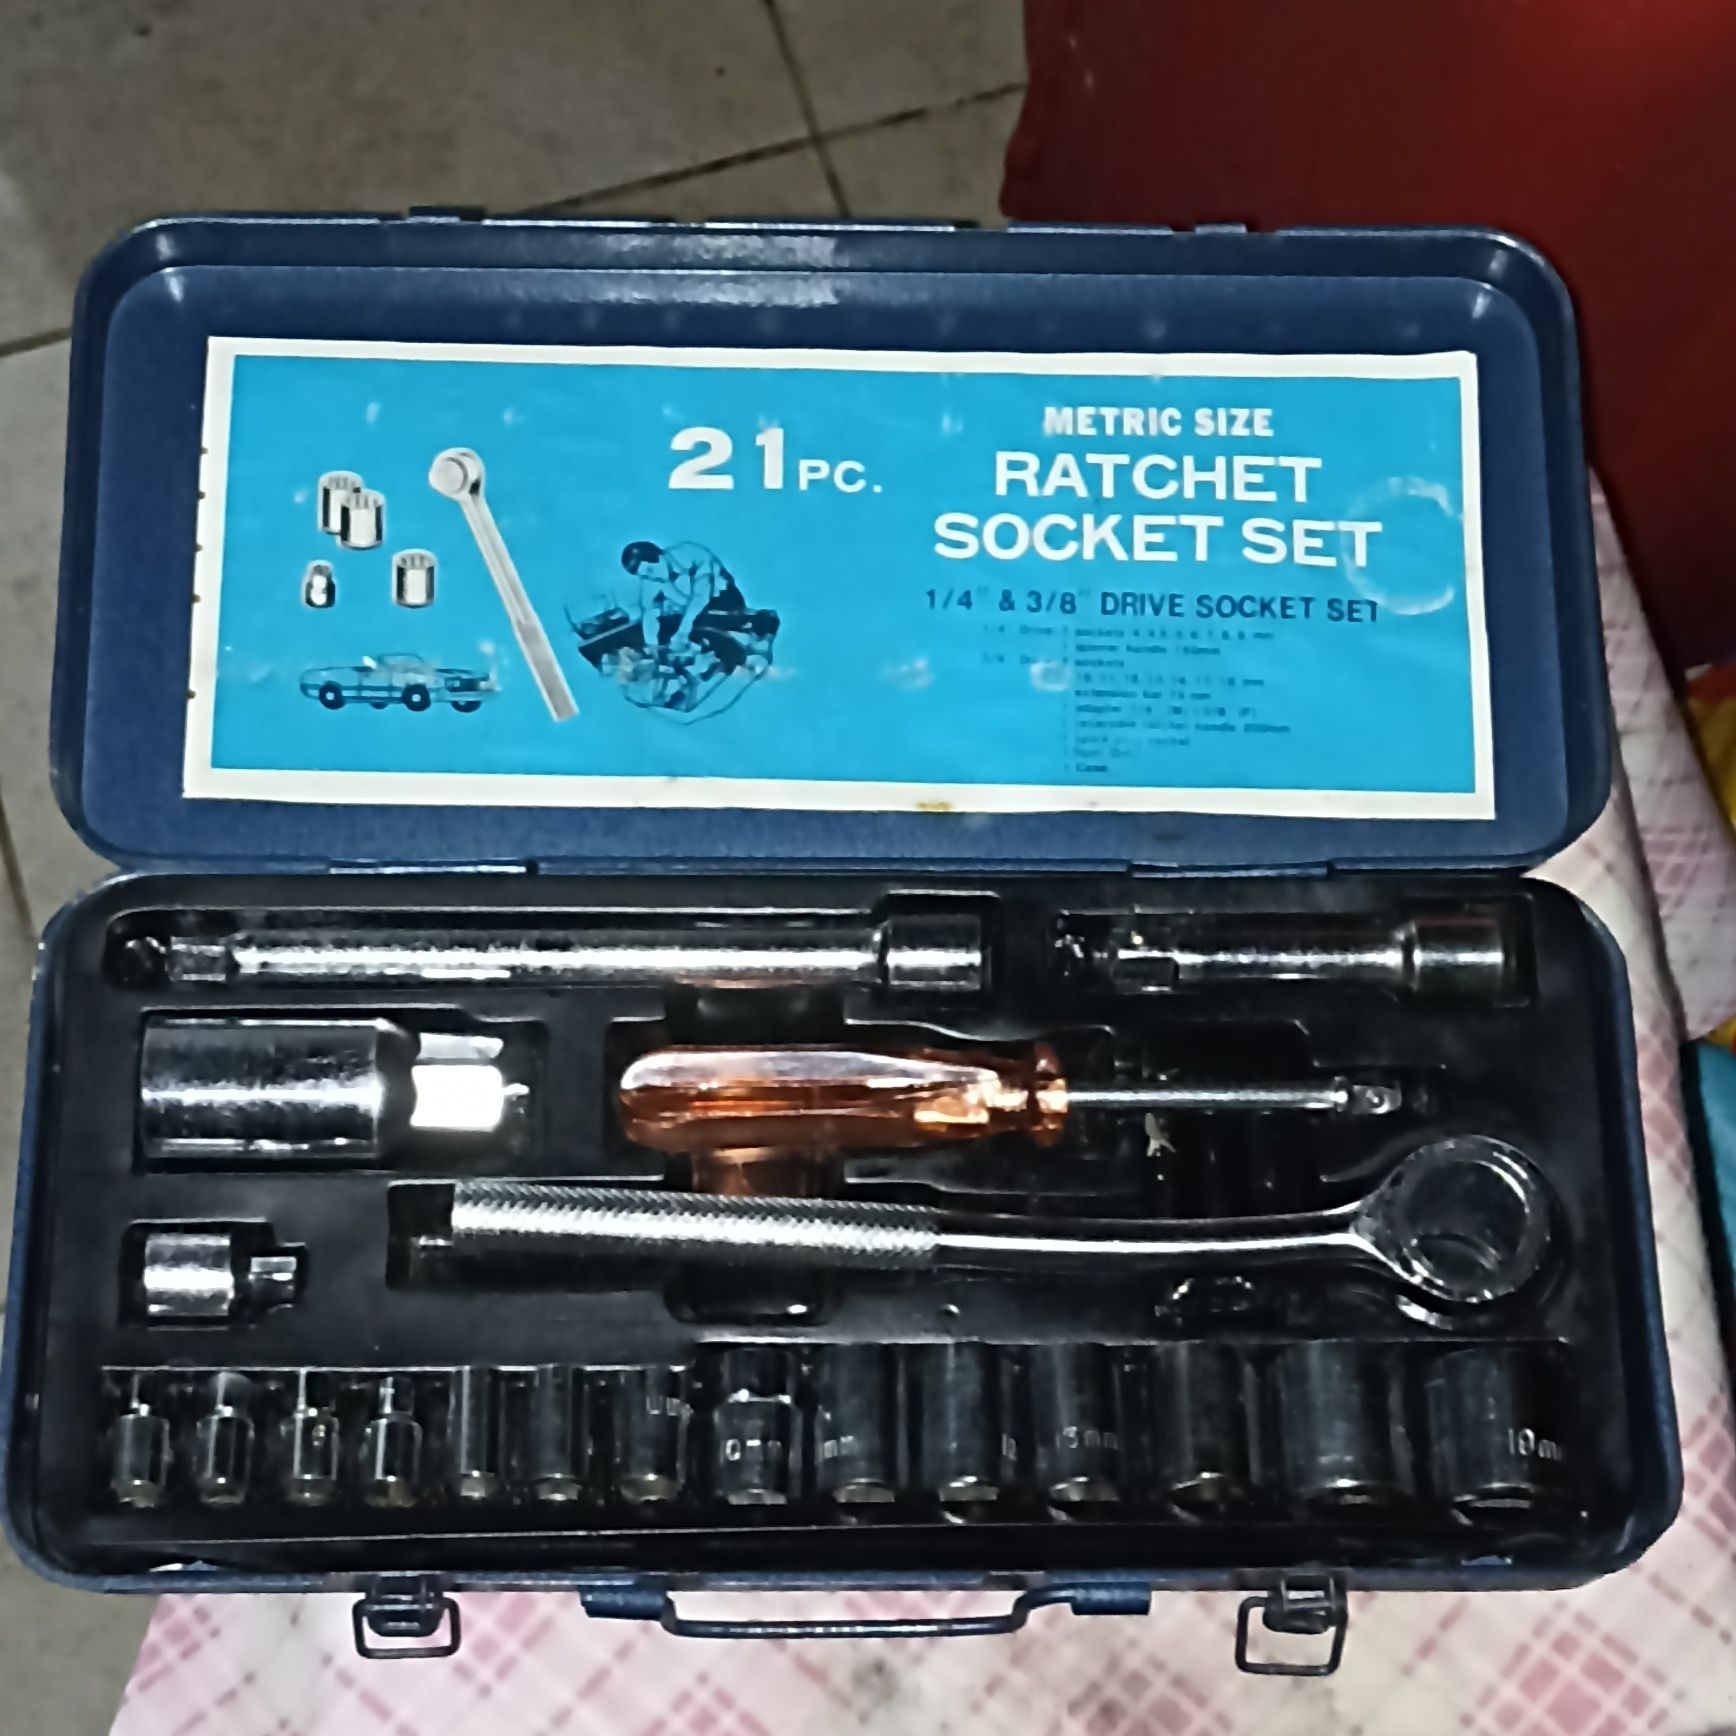 Caixa completa Metric Size Ratchet Socket Set